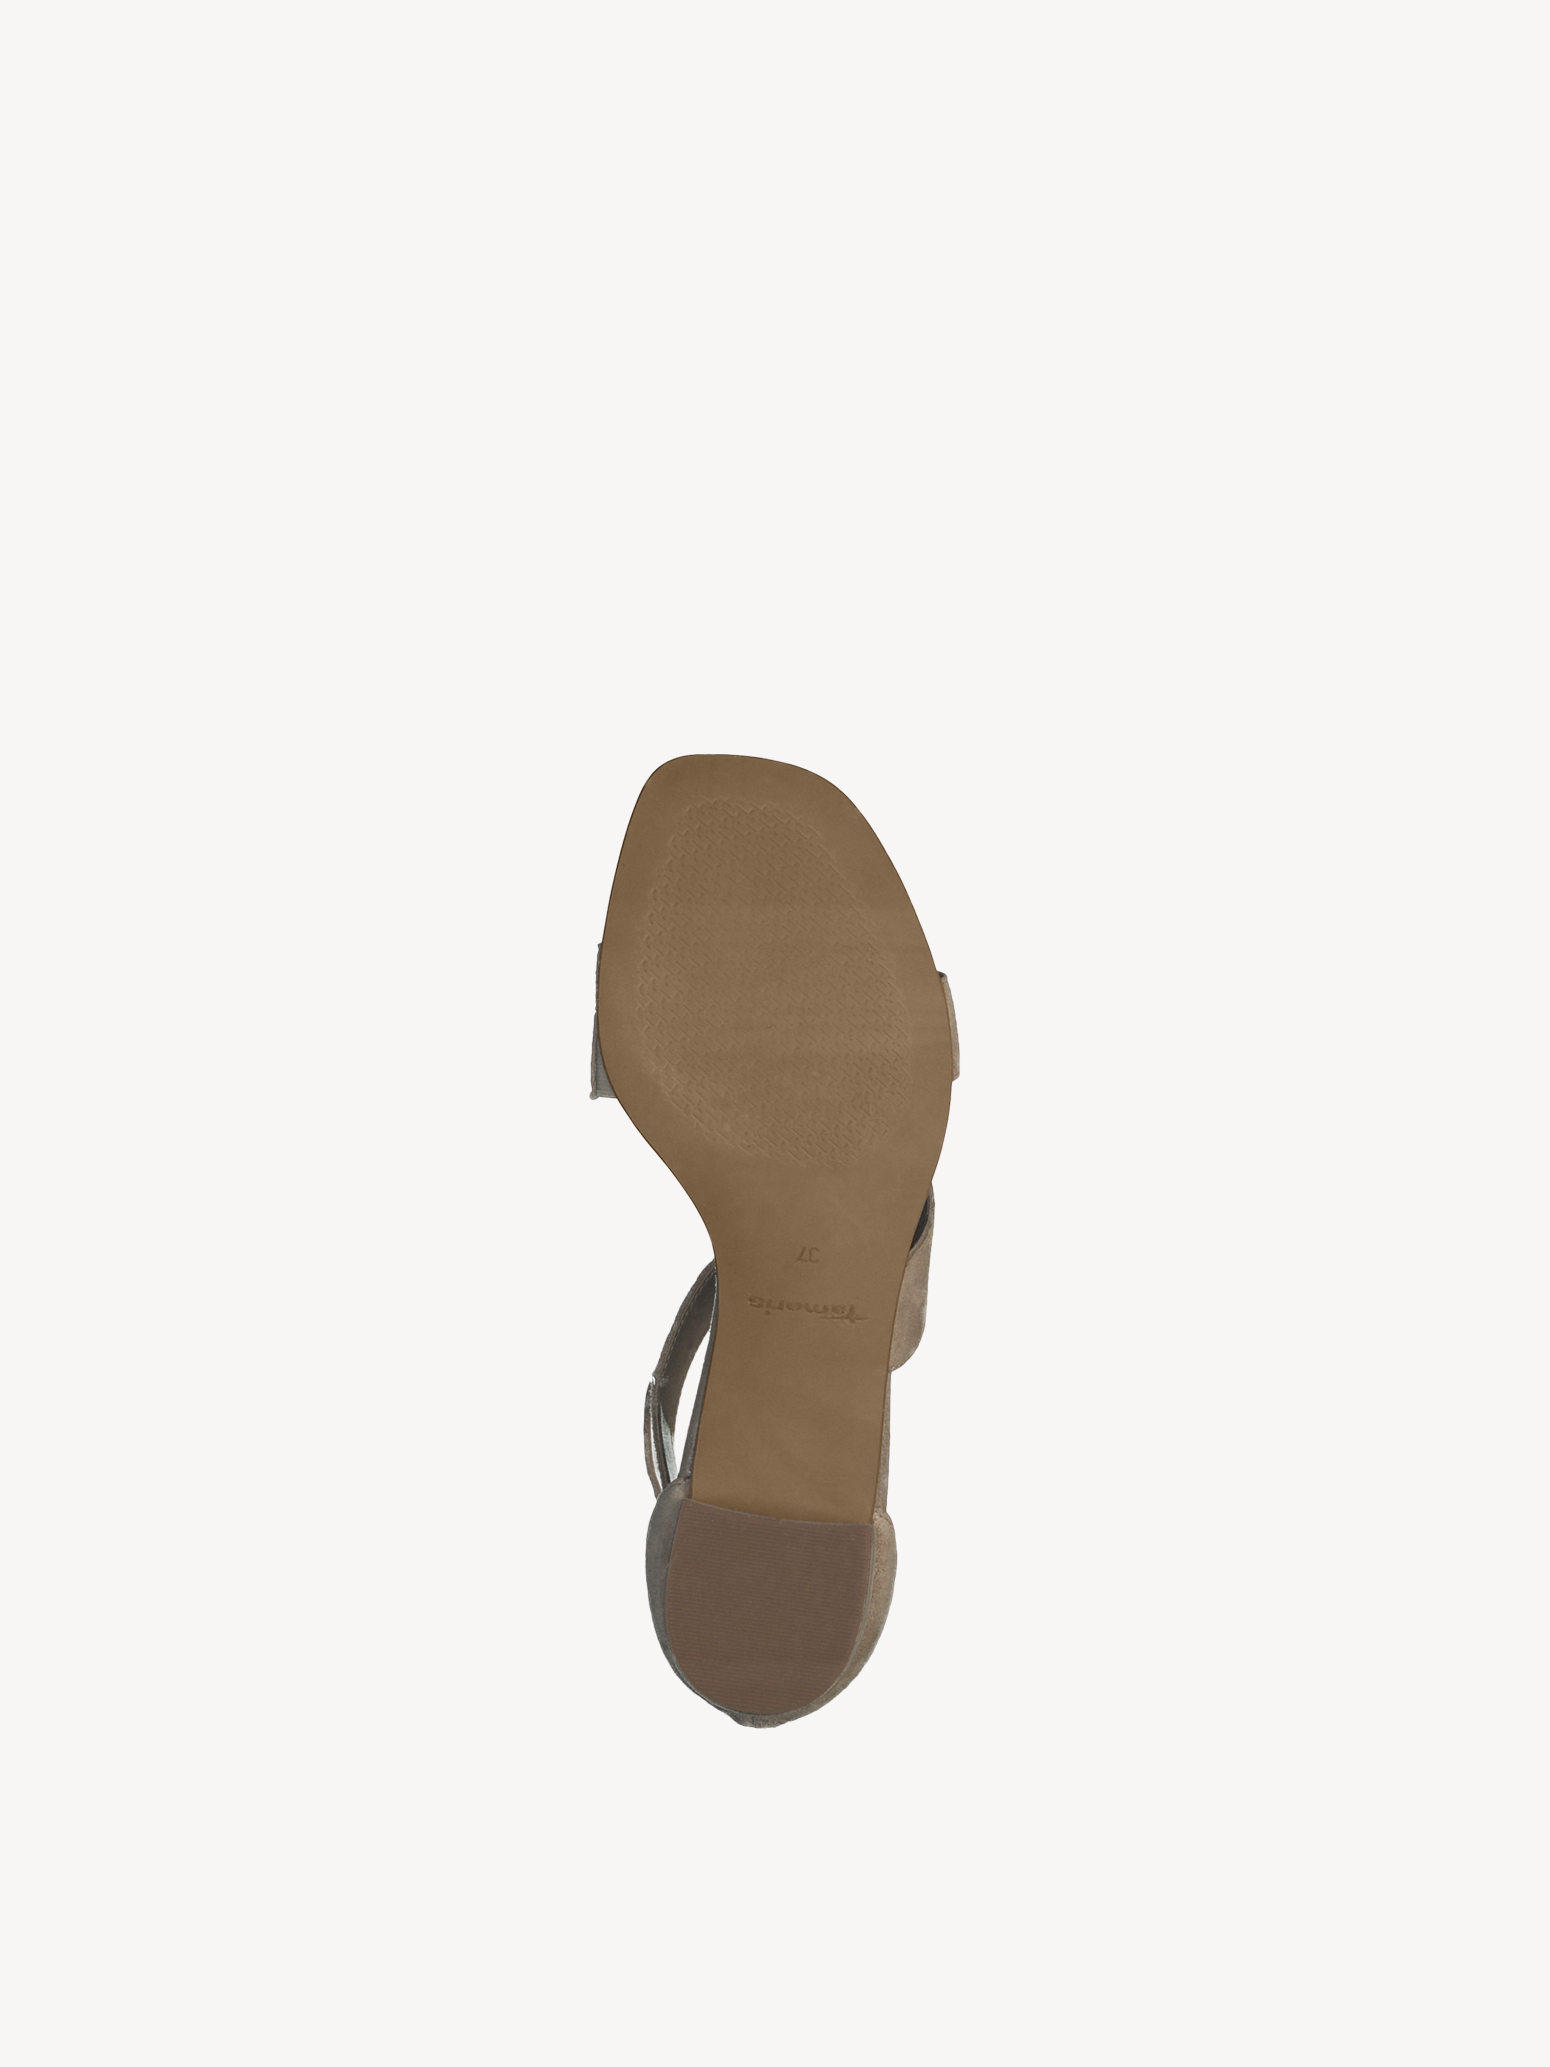 Leather Heeled sandal - beige, TAUPE, hi-res